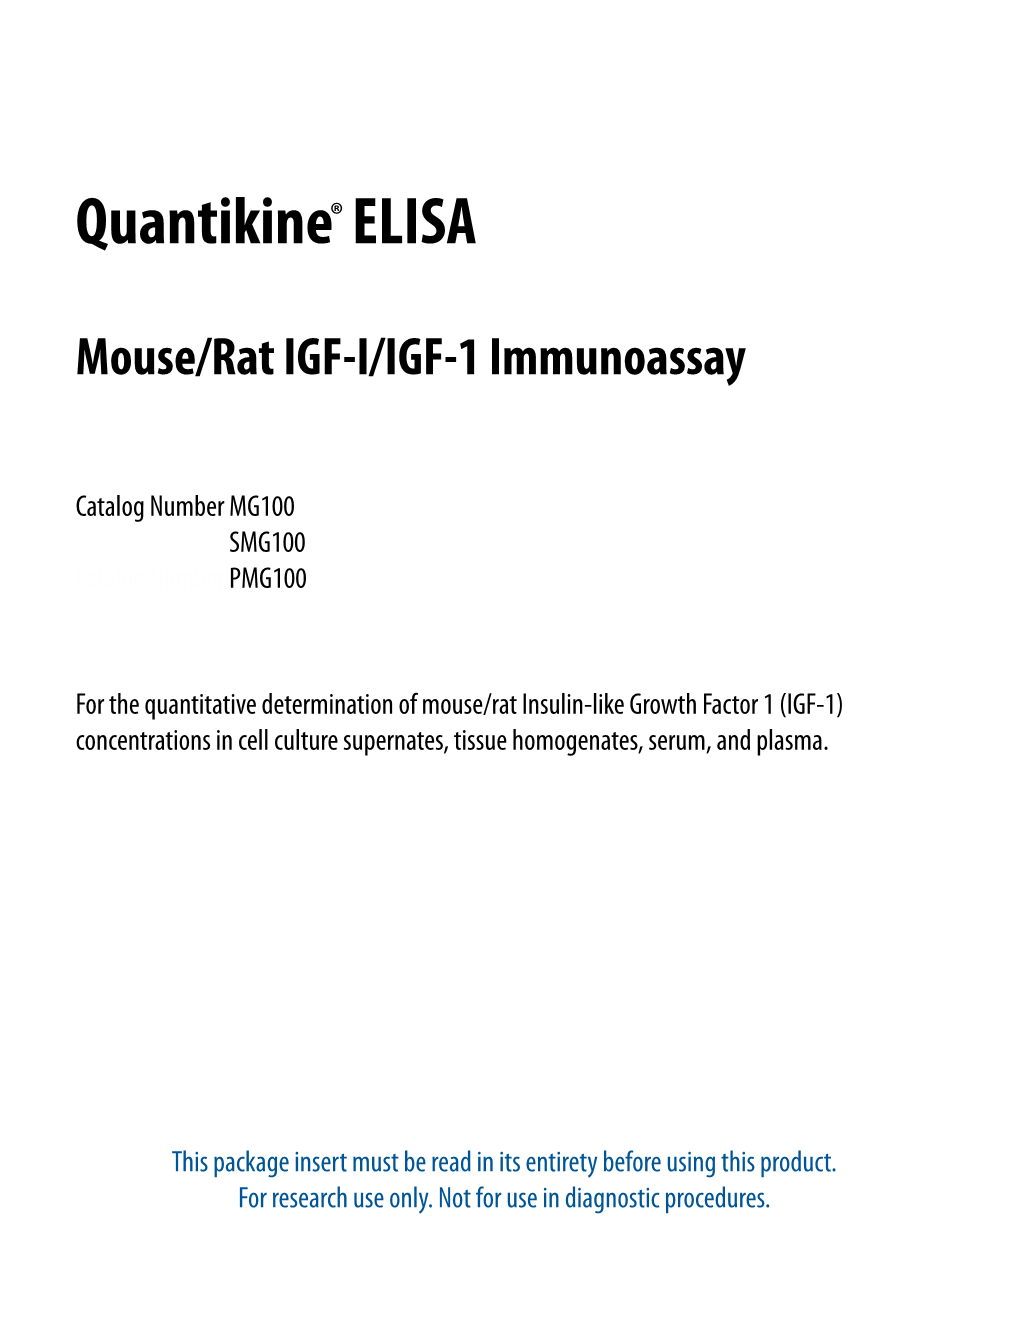 Mouse/Rat IGF-I/IGF-1 Quantikine